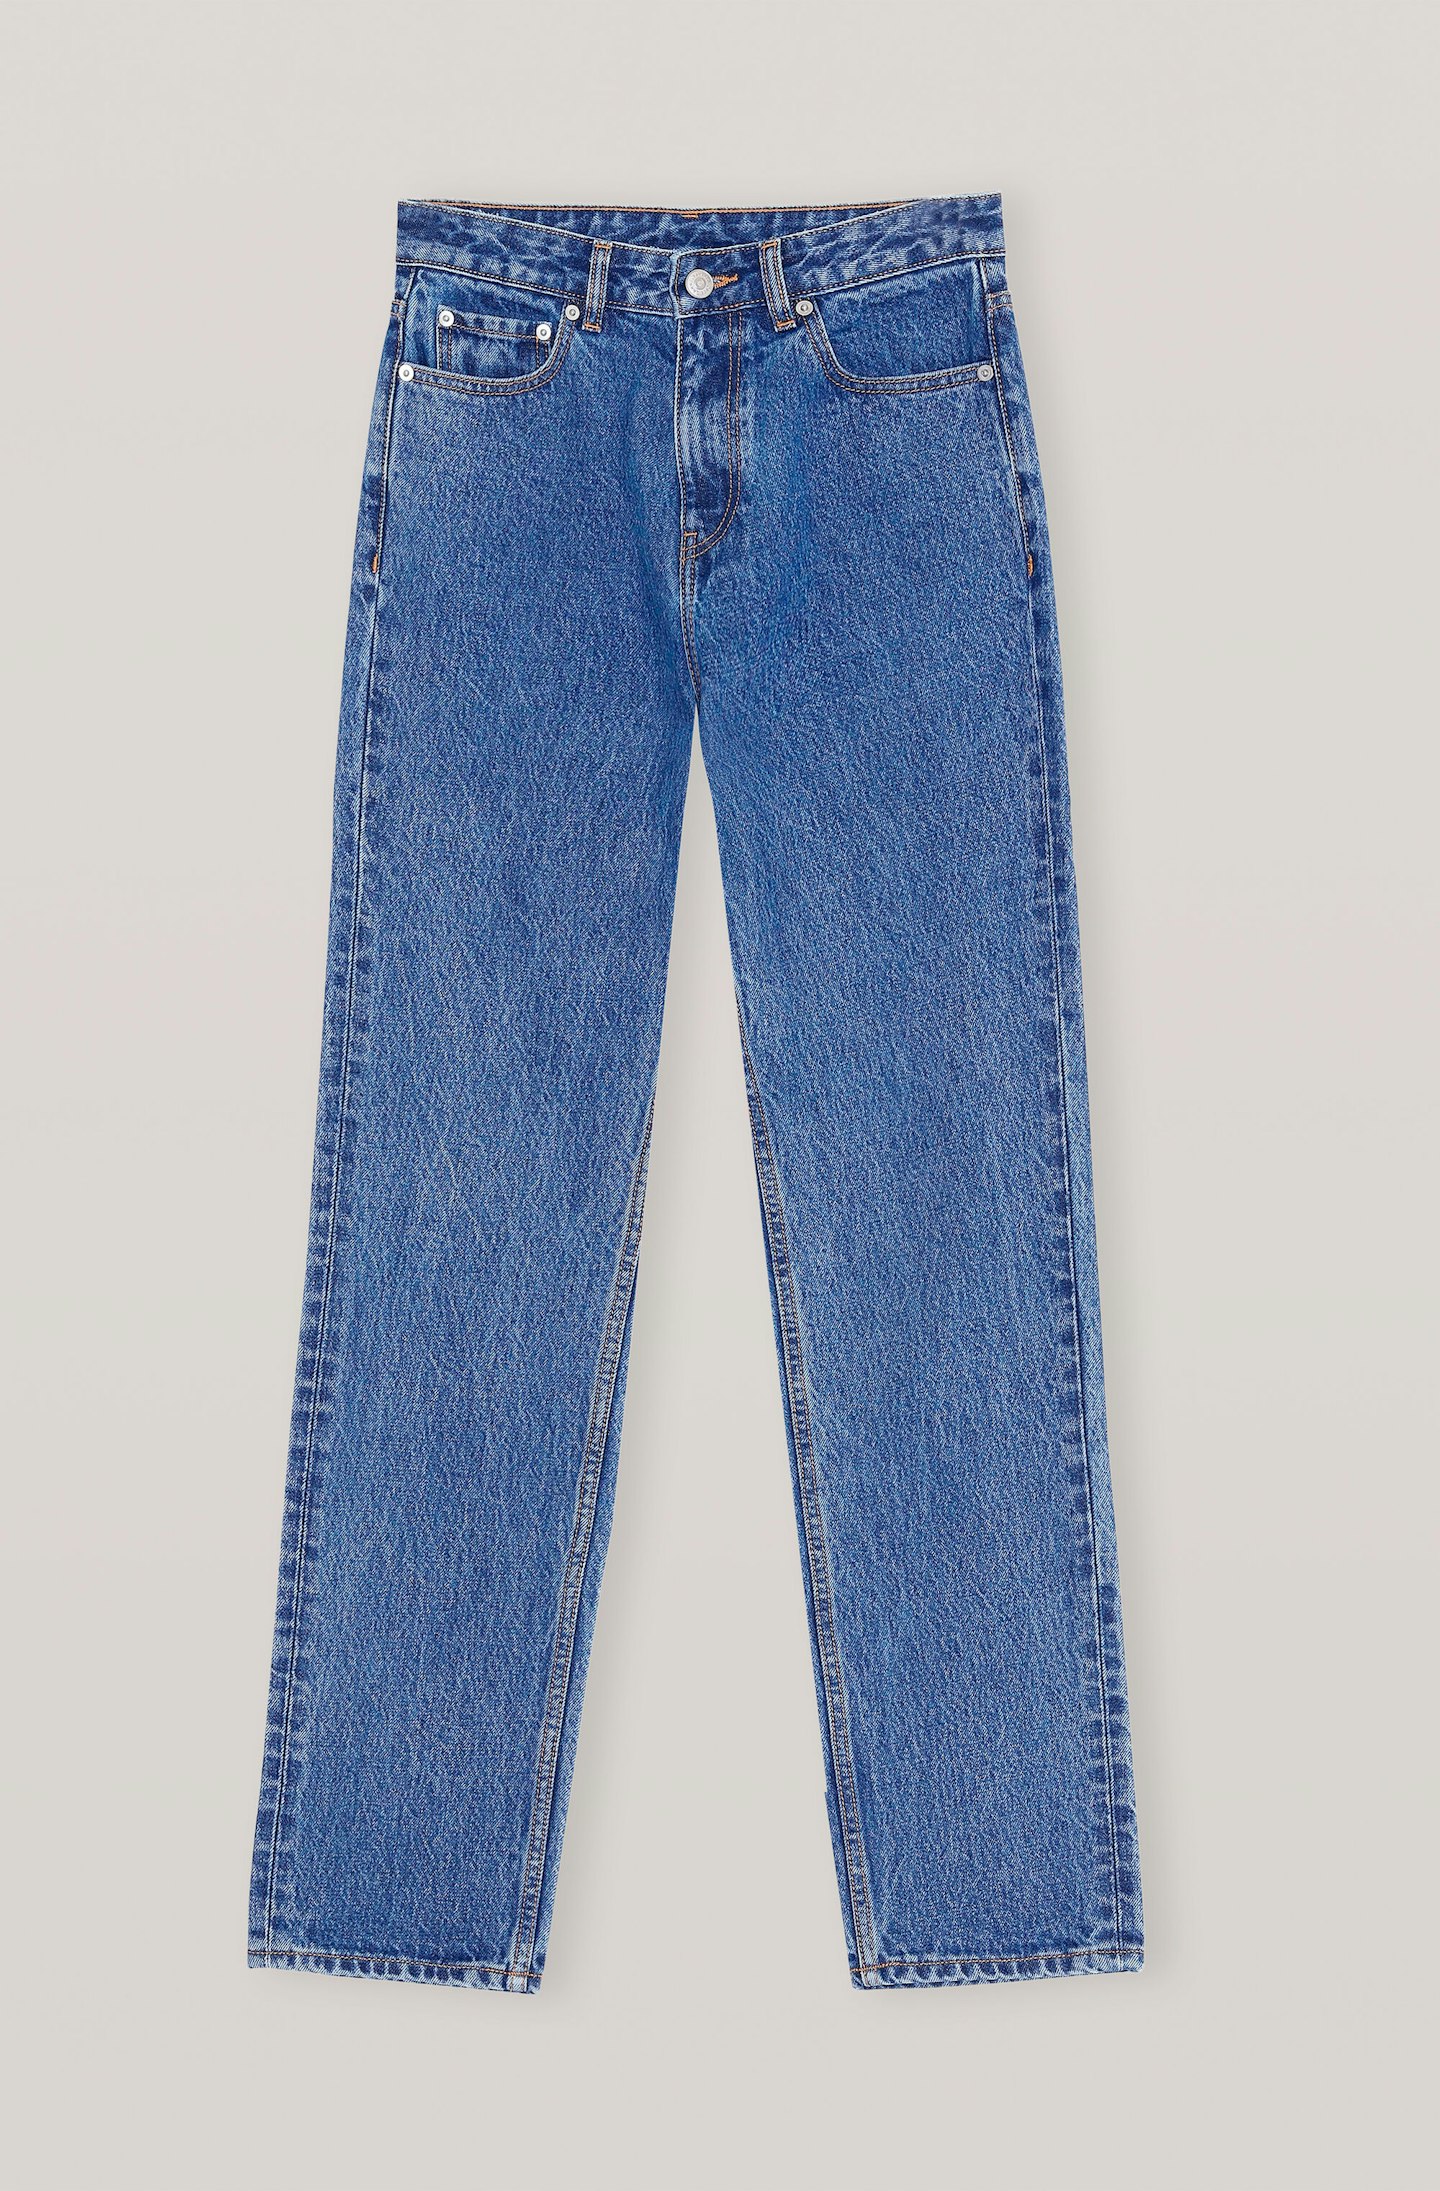 Ganni, Basic Denim High-Waisted Jeans, £195